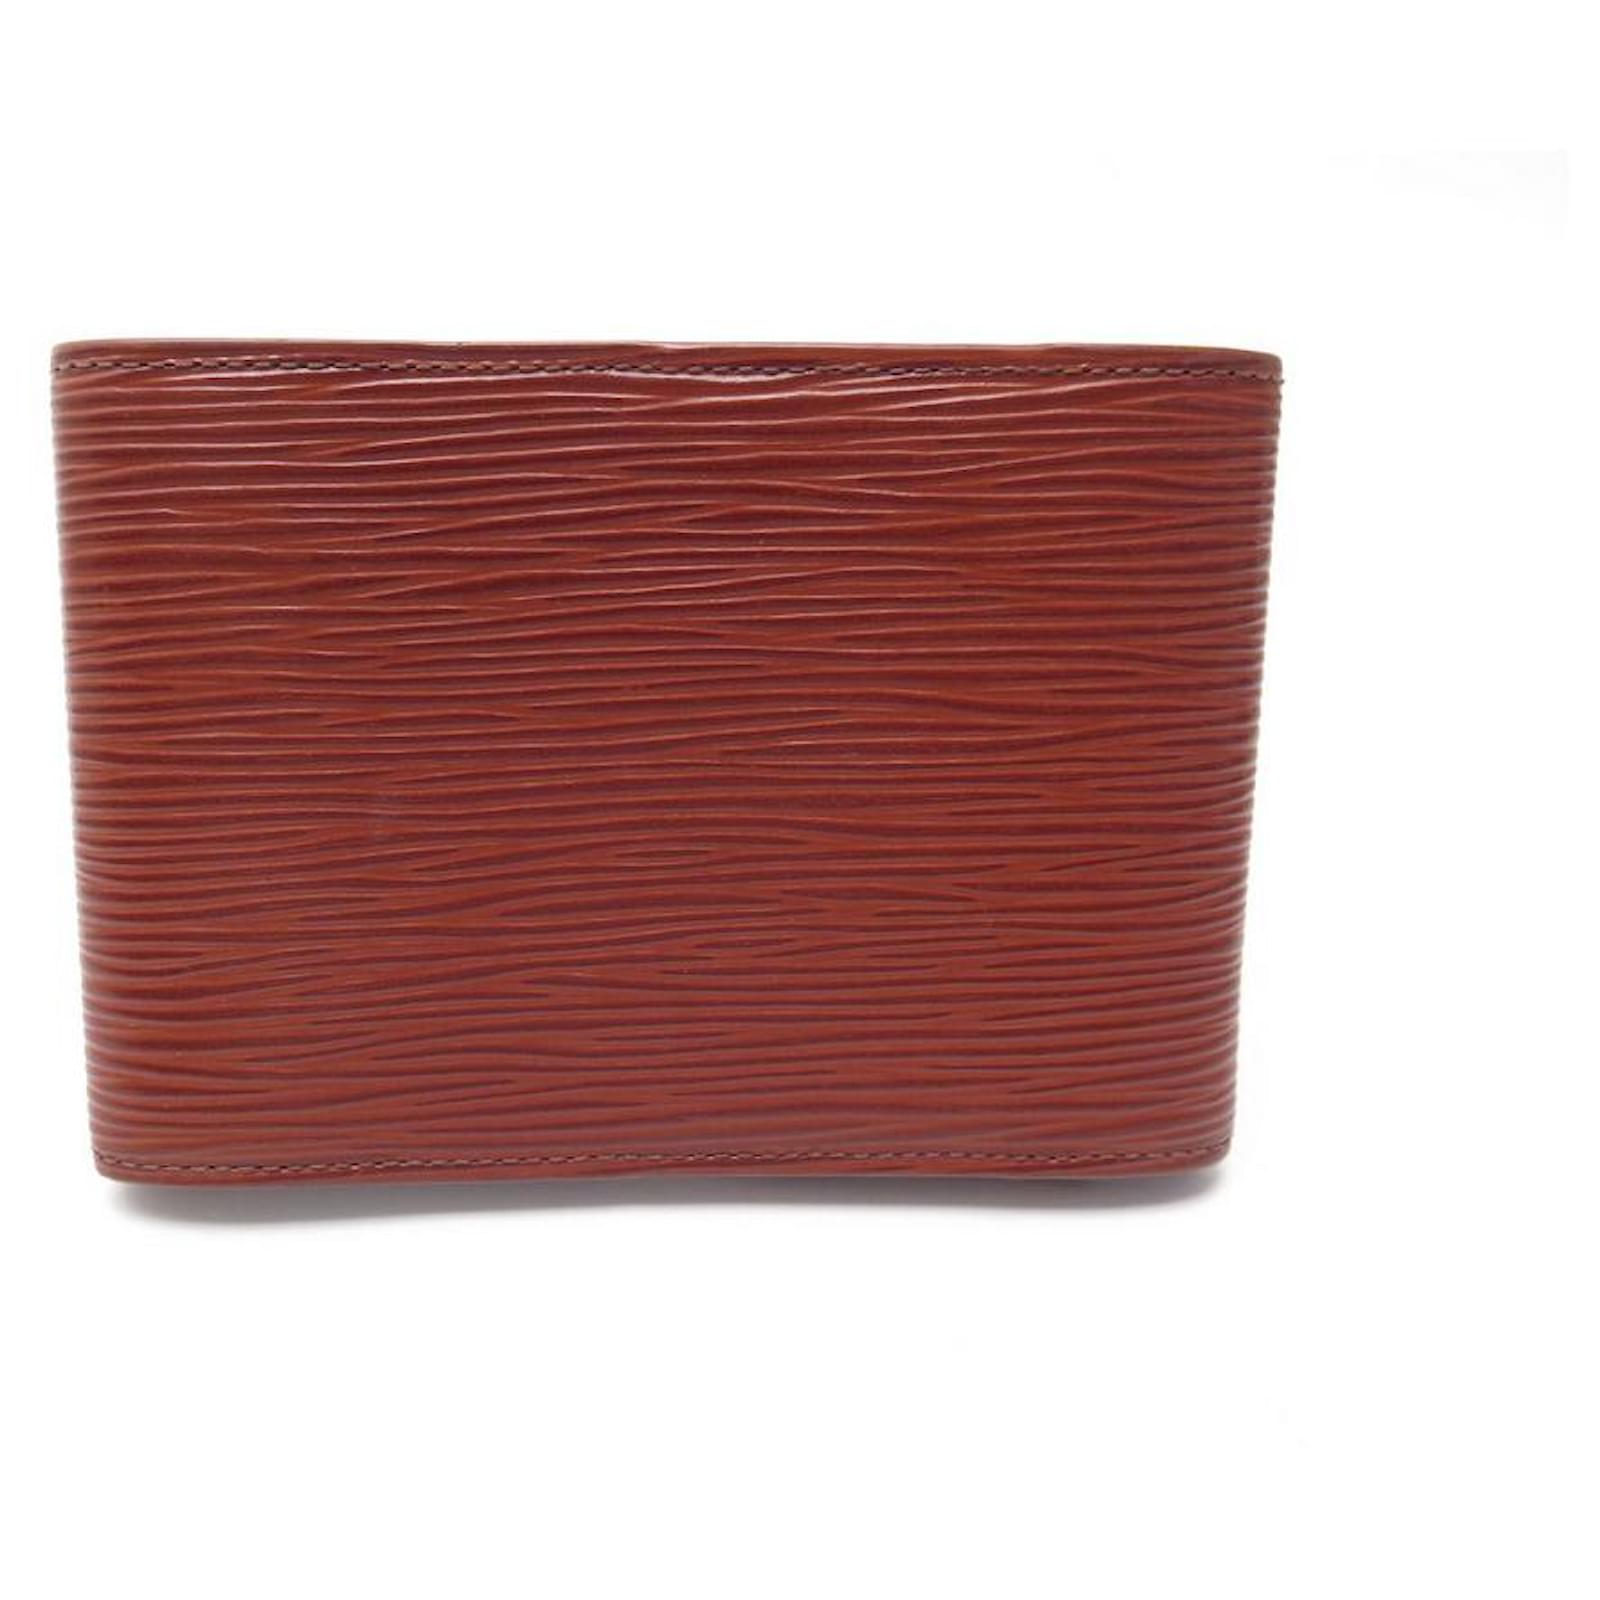 Louis Vuitton Epi Leather Checkbook Wallet